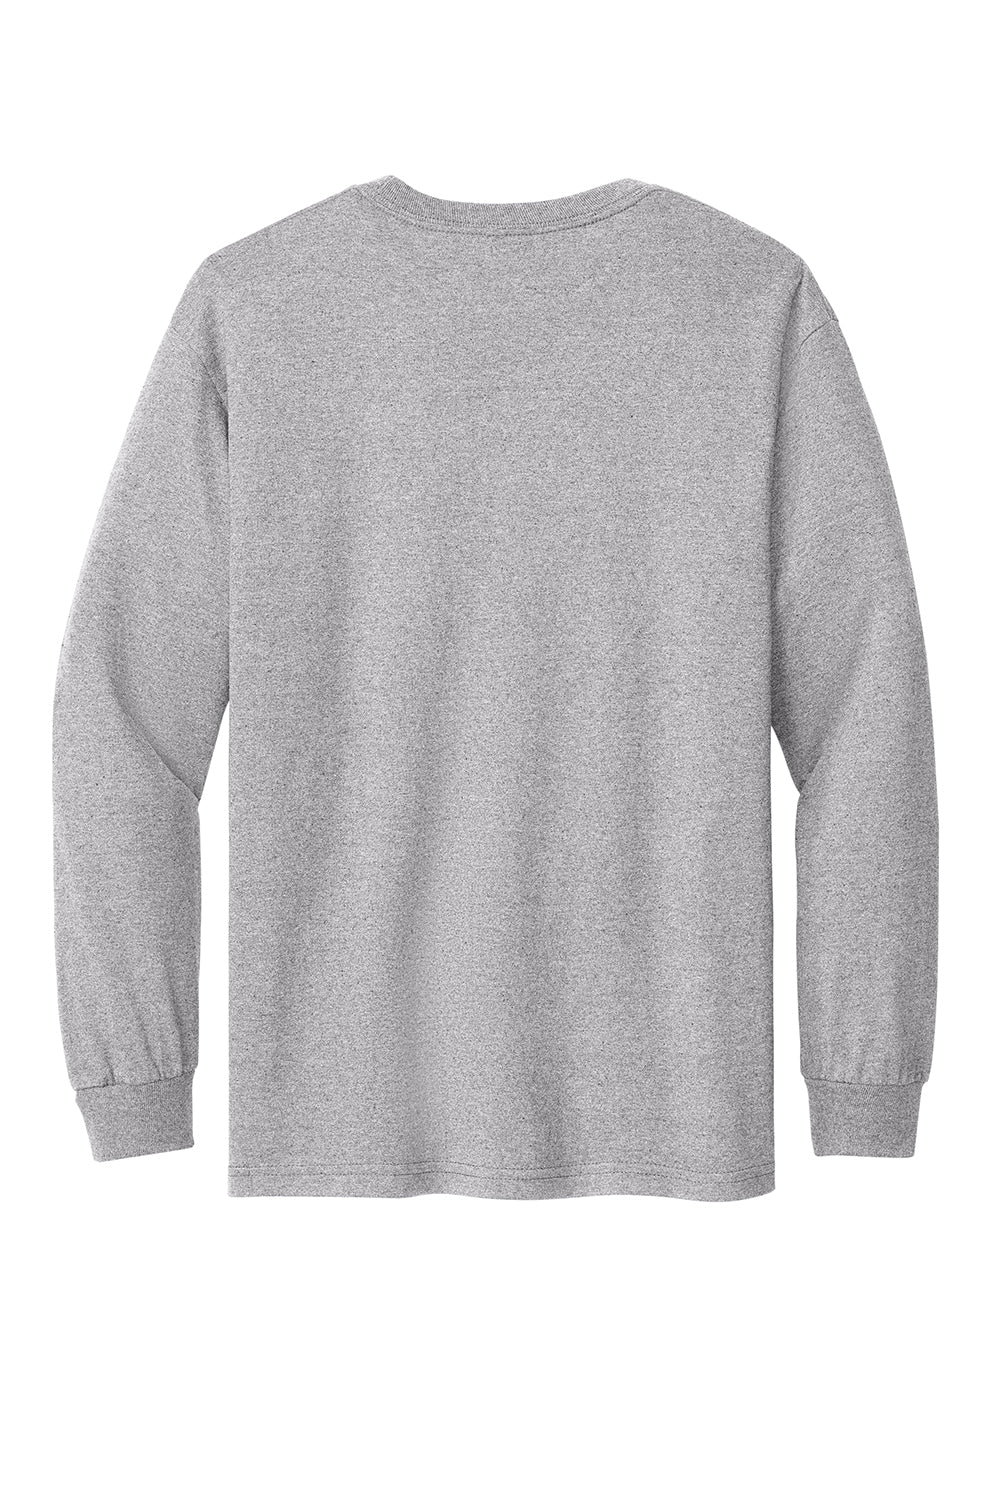 American Apparel AL1304/1304 Mens Long Sleeve Crewneck T-Shirt Heather Grey Model Flat Back